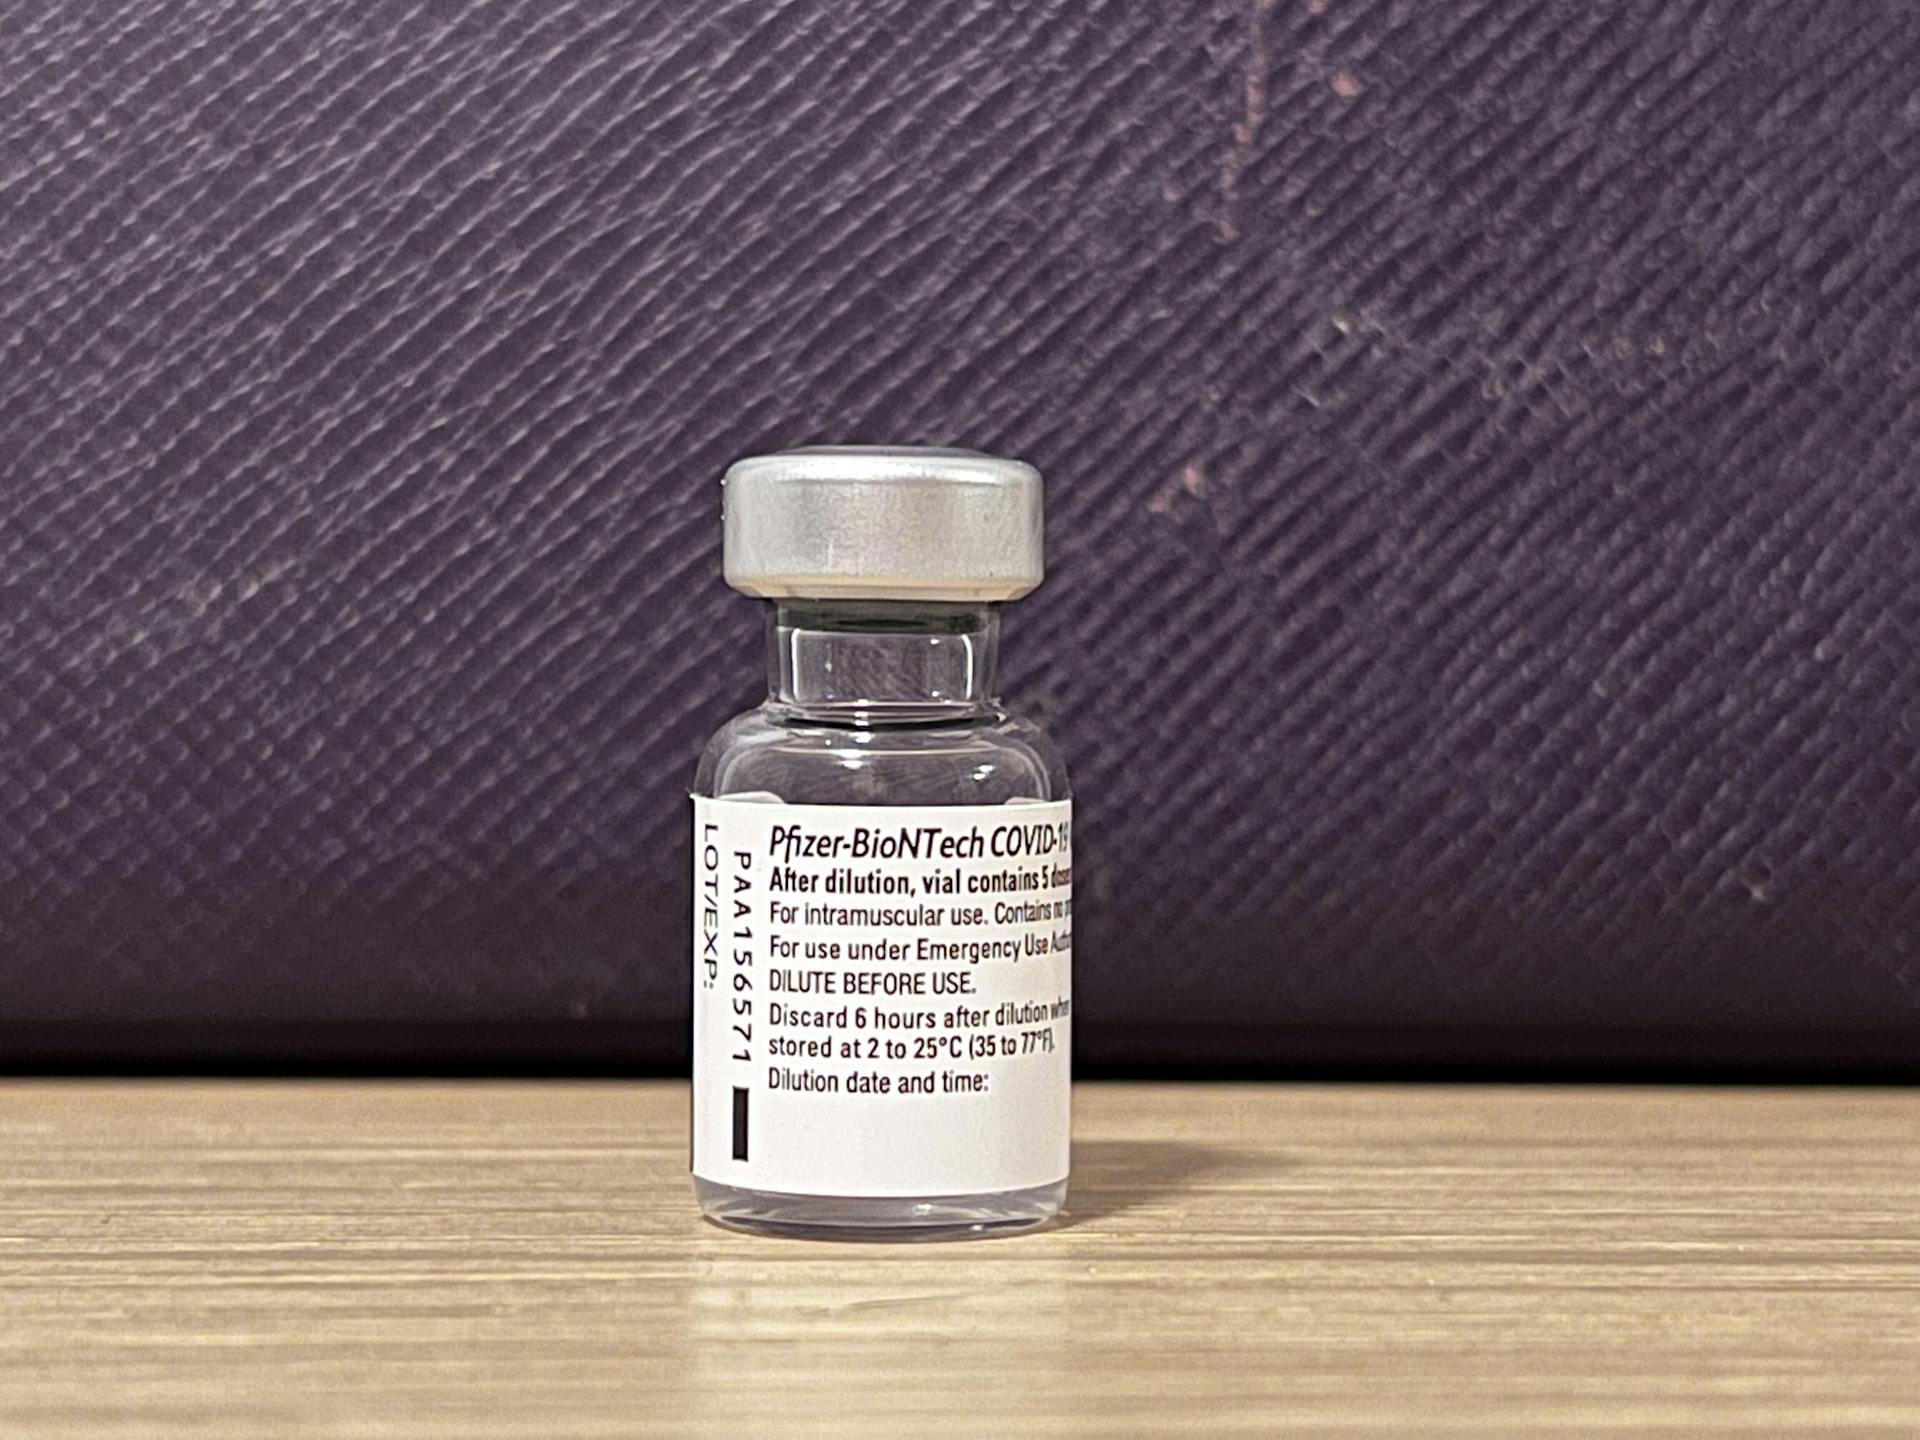 Photograph of Pfizer-BioNTech Vaccine Vial